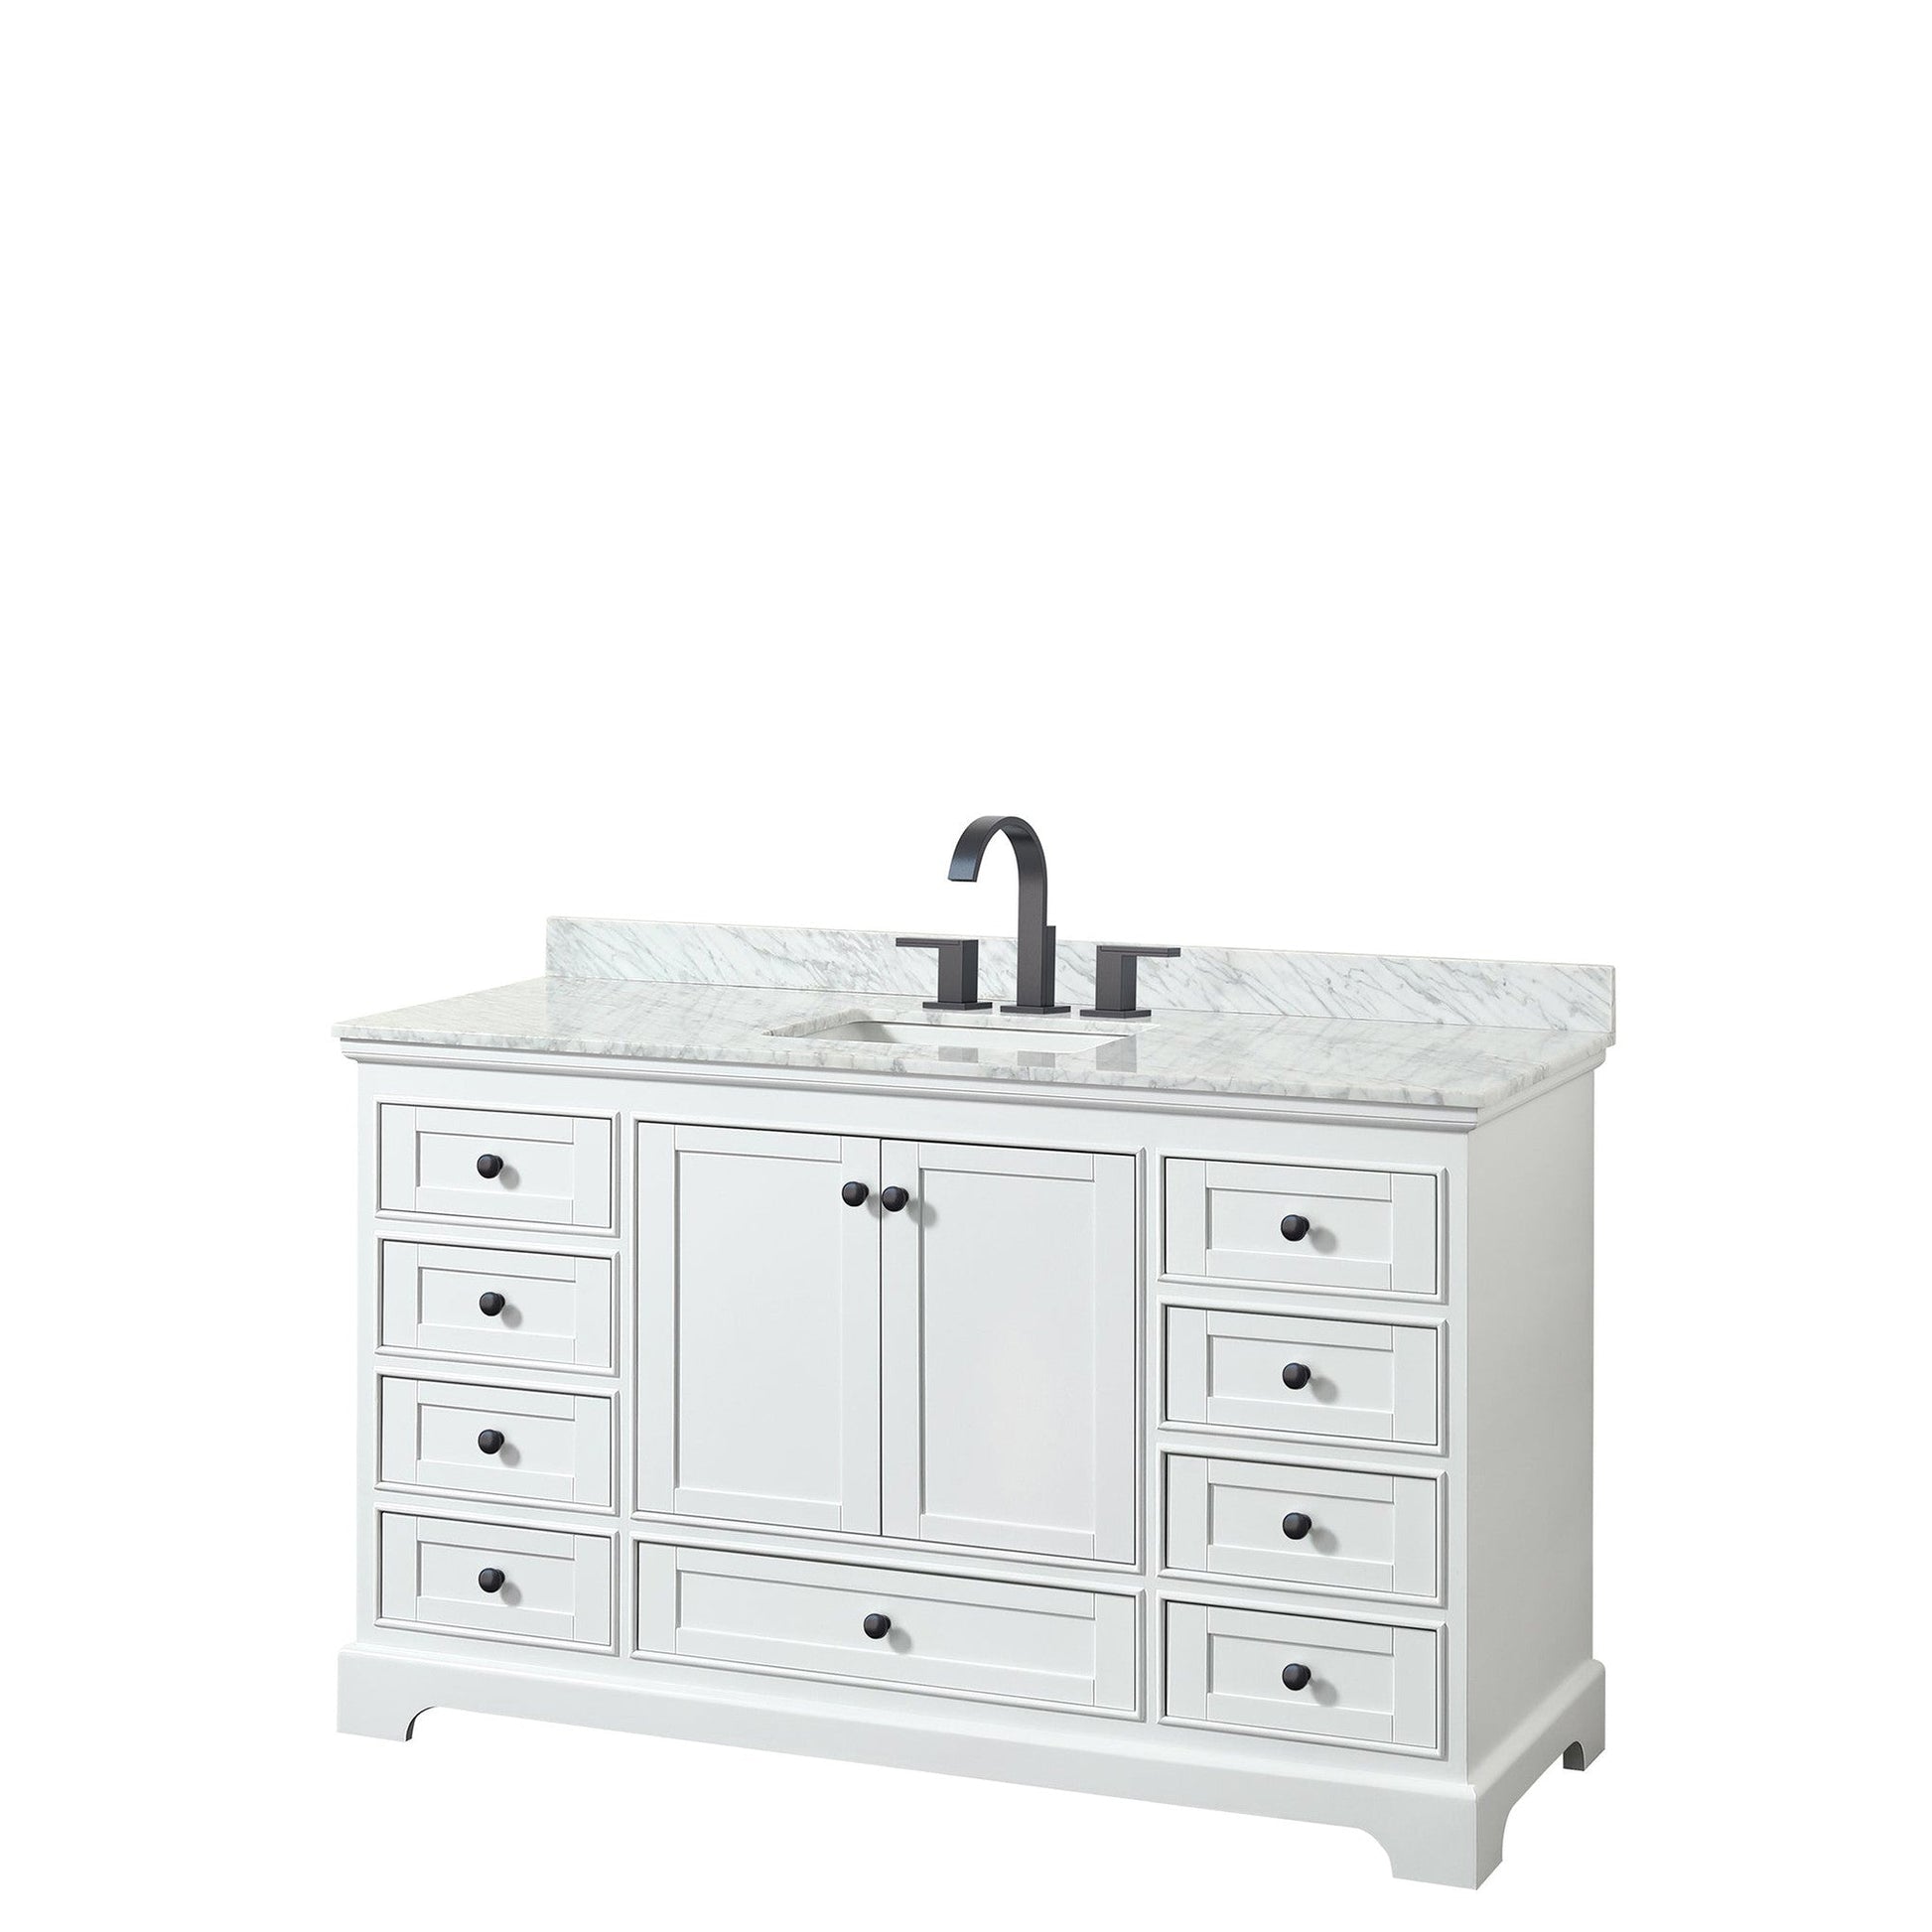 Deborah 60" Single Bathroom Vanity in White, White Carrara Marble Countertop, Undermount Square Sink, Matte Black Trim